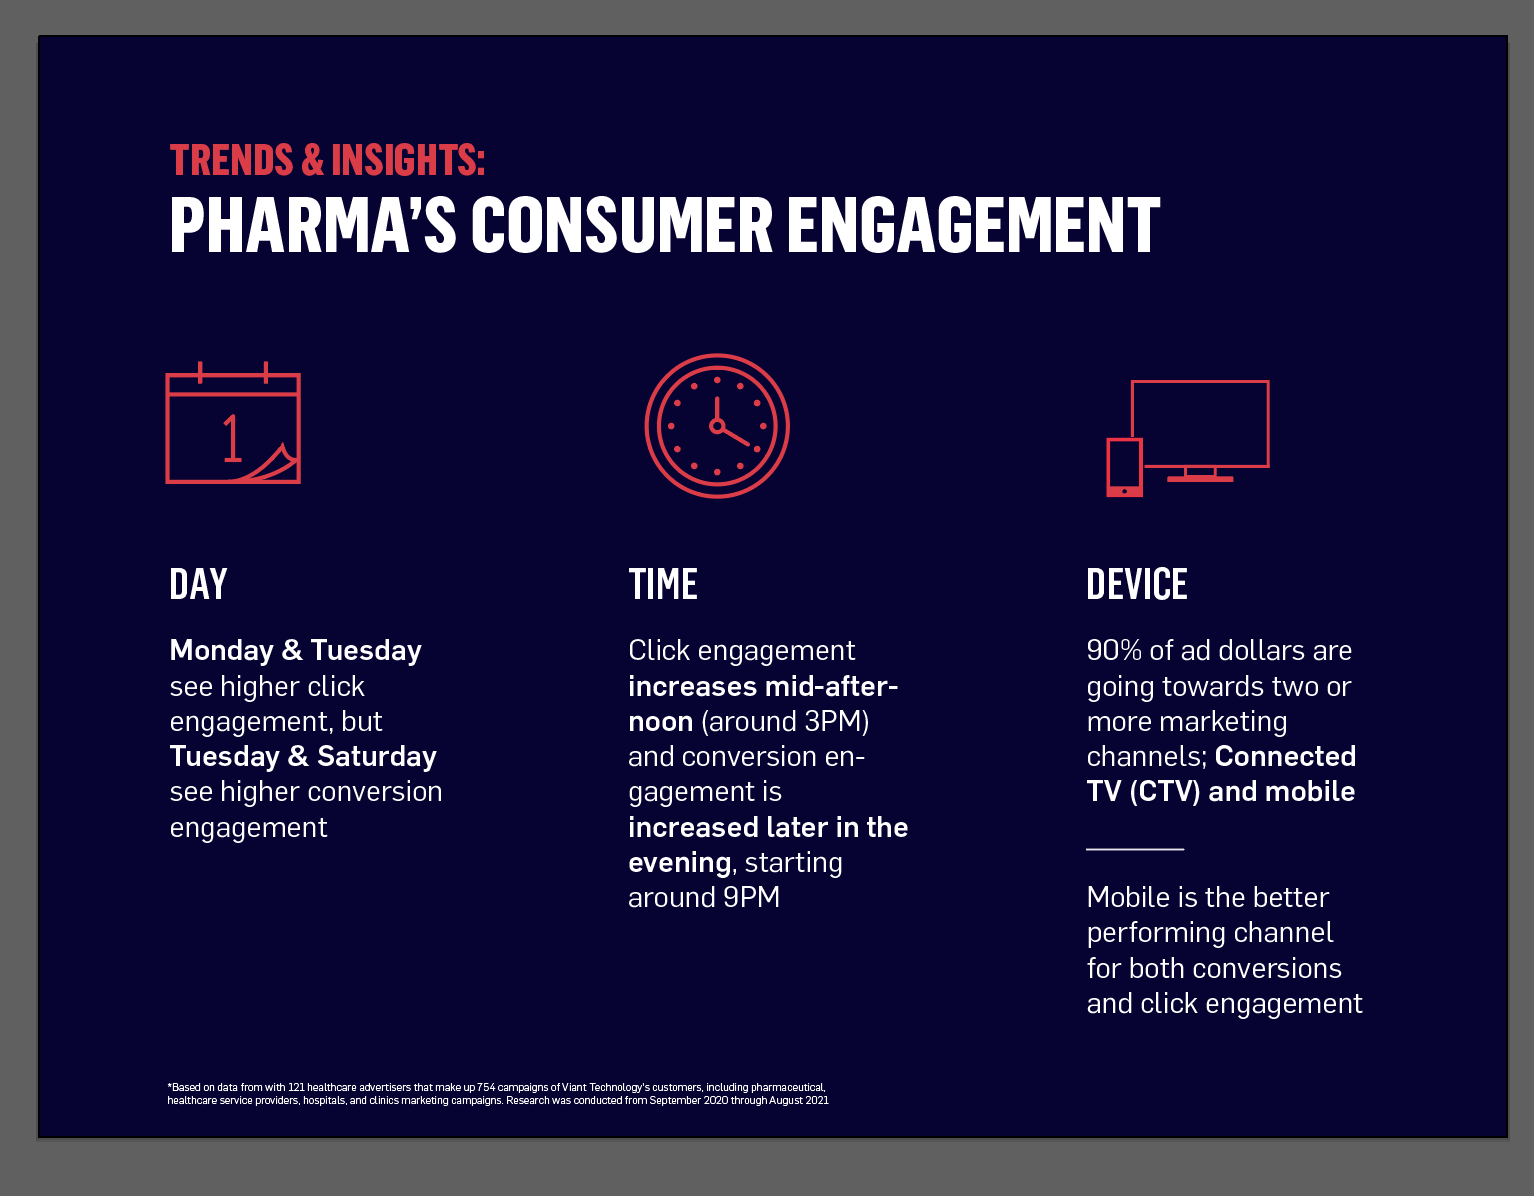 Pharma consumer engagement stats